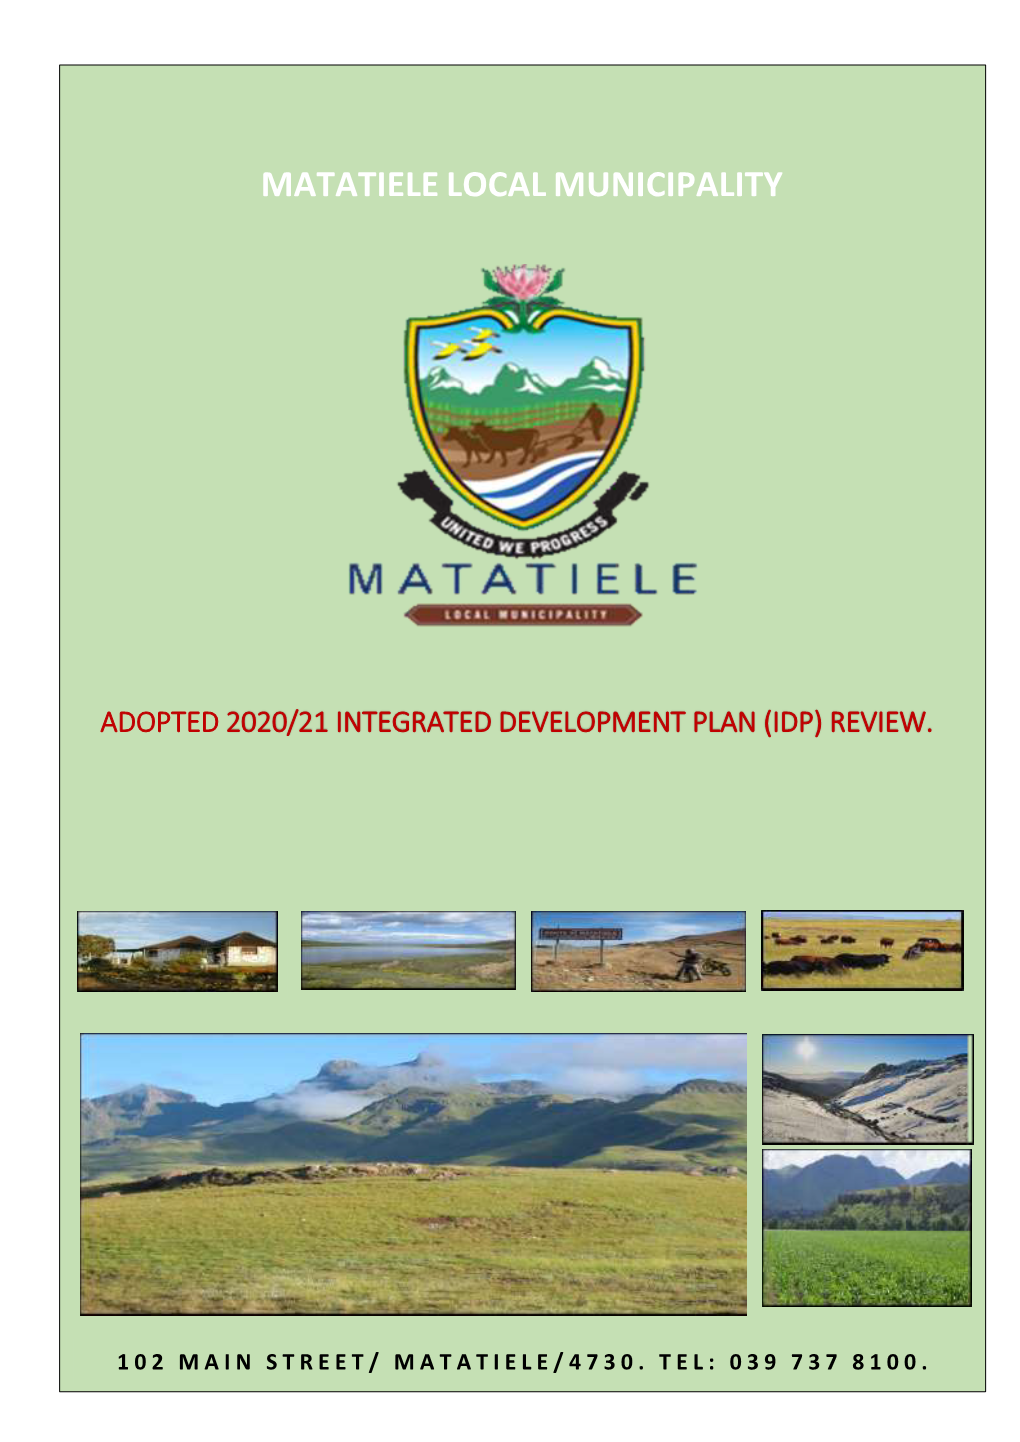 MATATIELE ADOPTED 2020-21 IDP Document